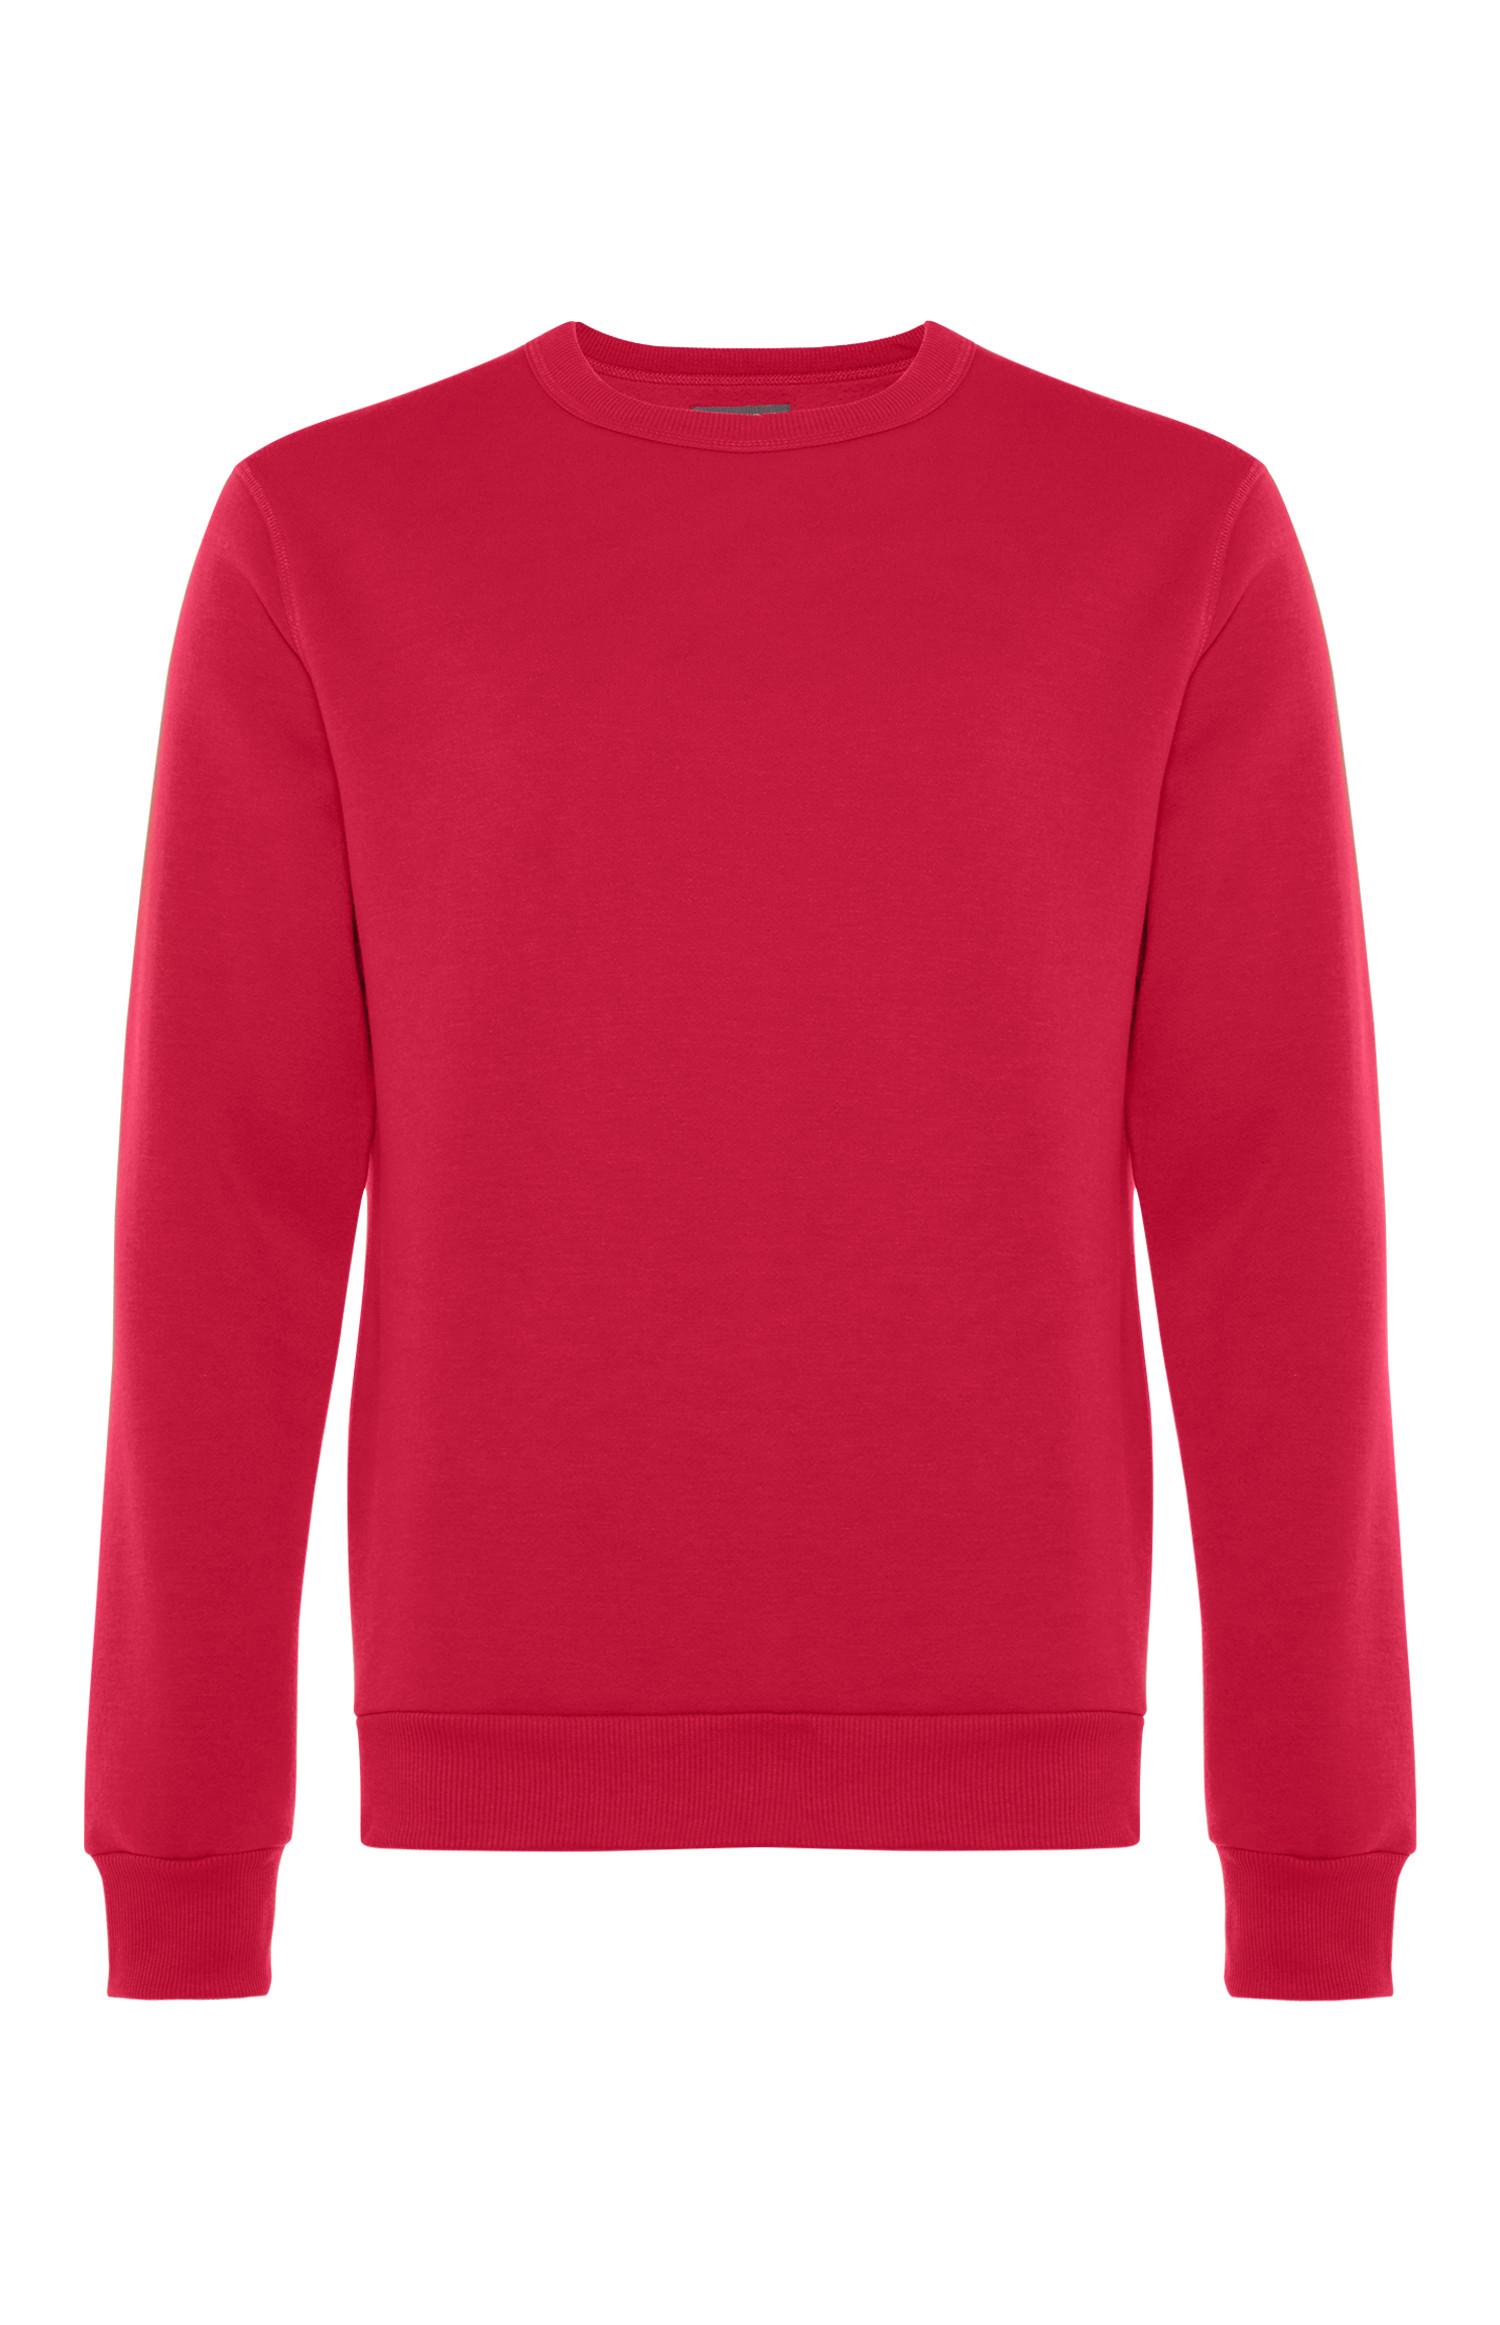 mens red crew neck sweater